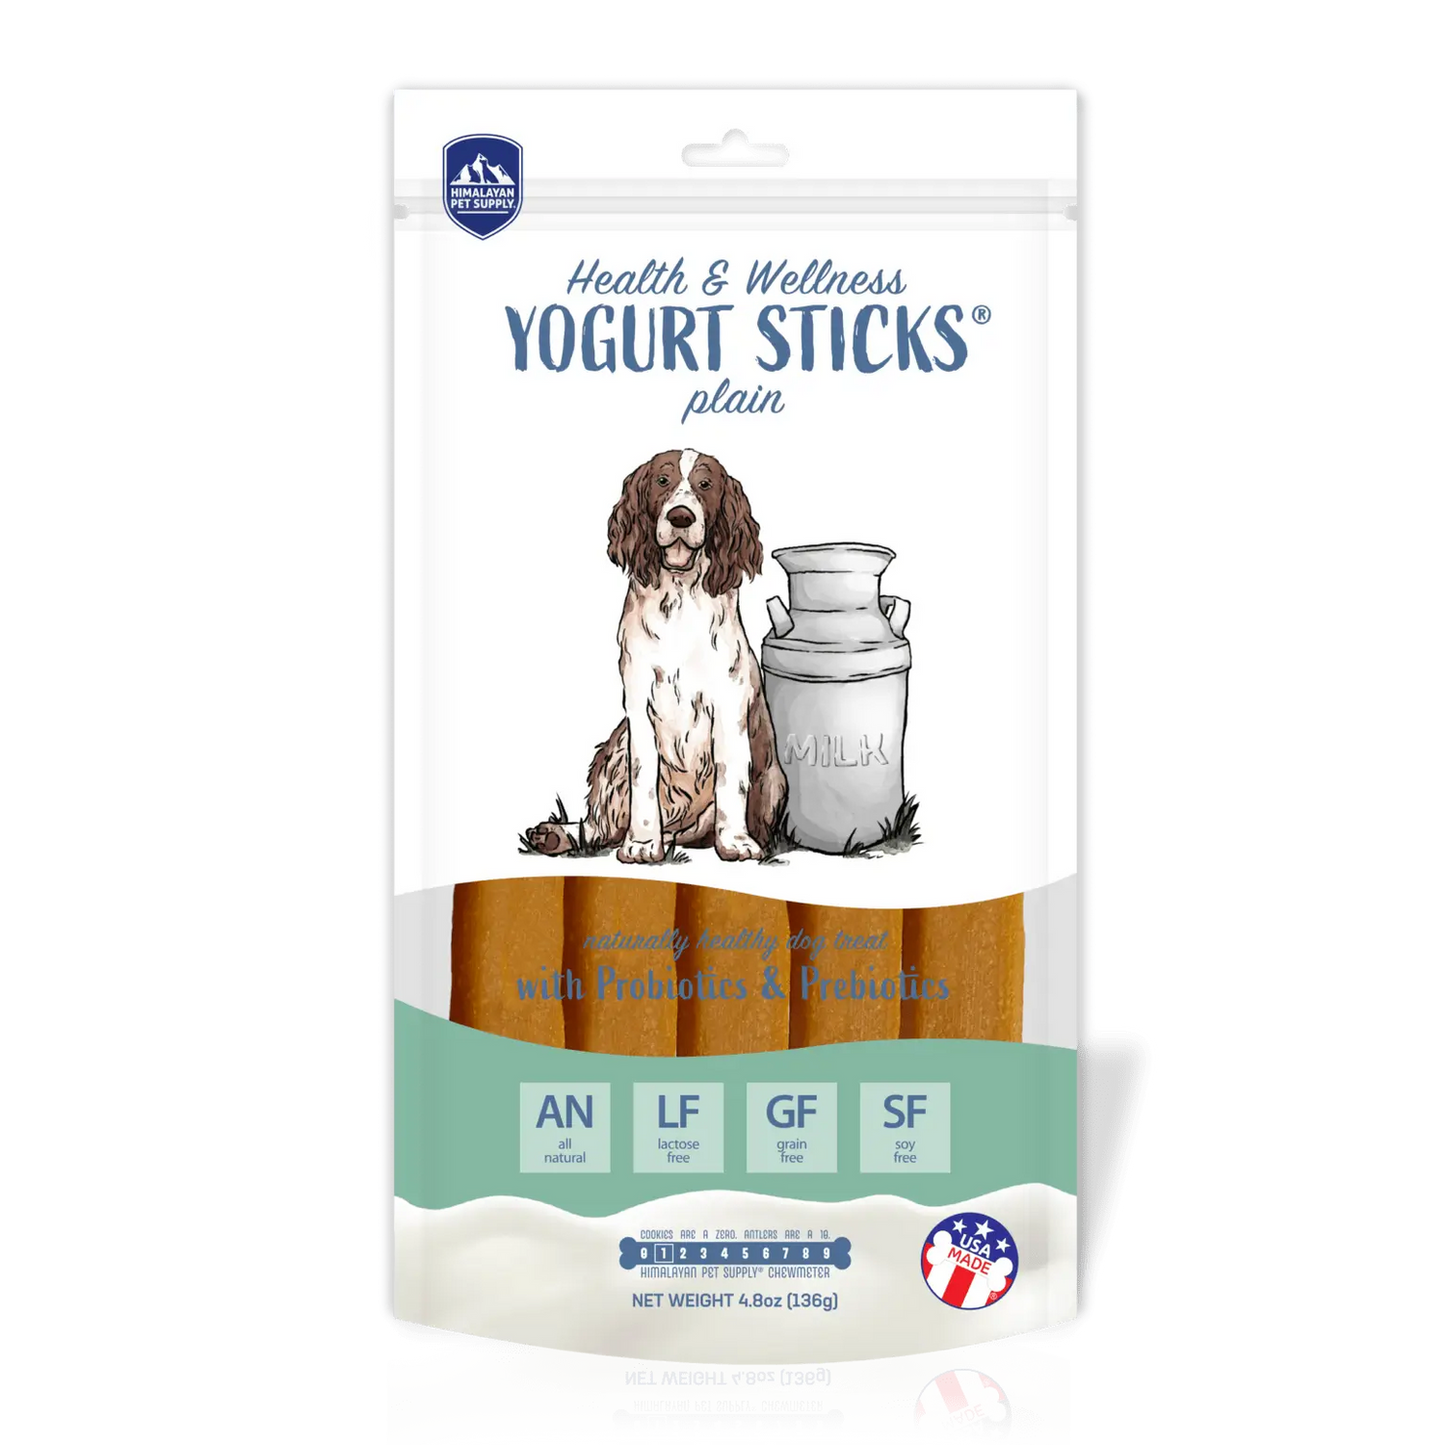 Primal Yogurt Sticks for Dogs Plain with Prebiotics and Probiotics